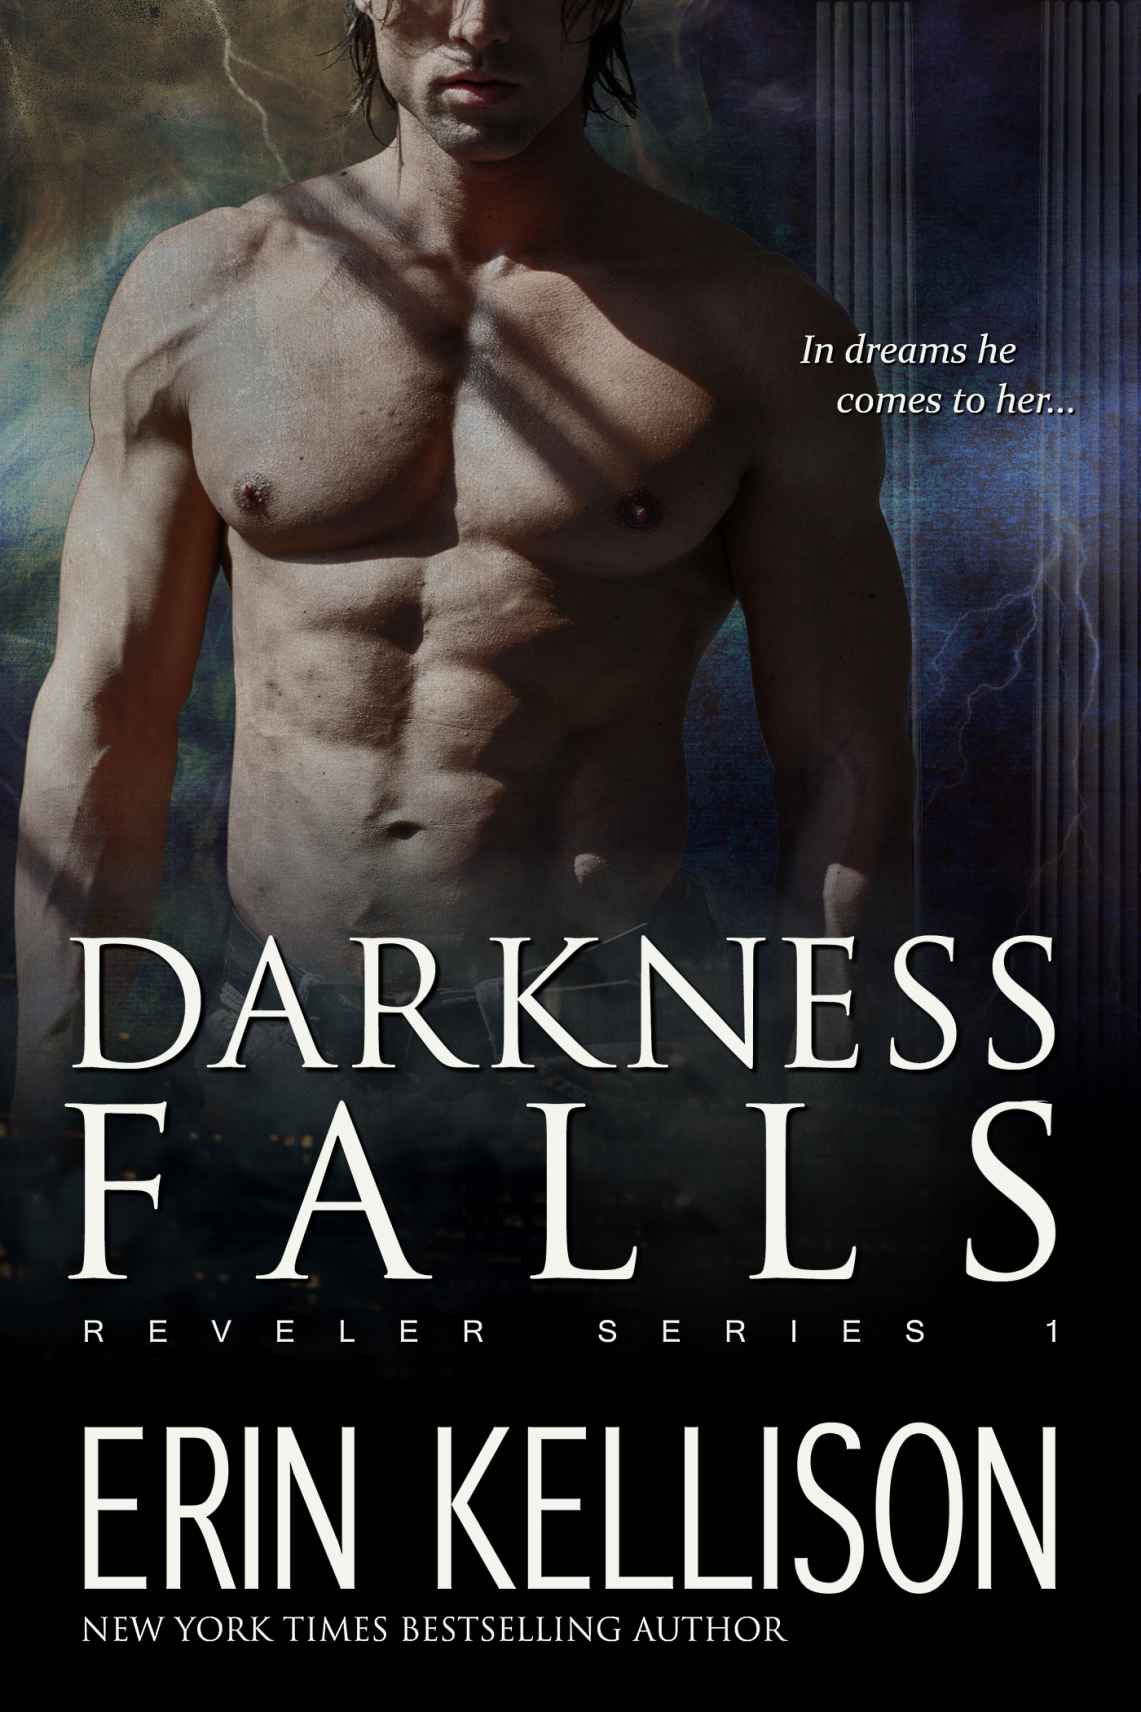 Darkness Falls: Reveler Series 1 by Erin Kellison